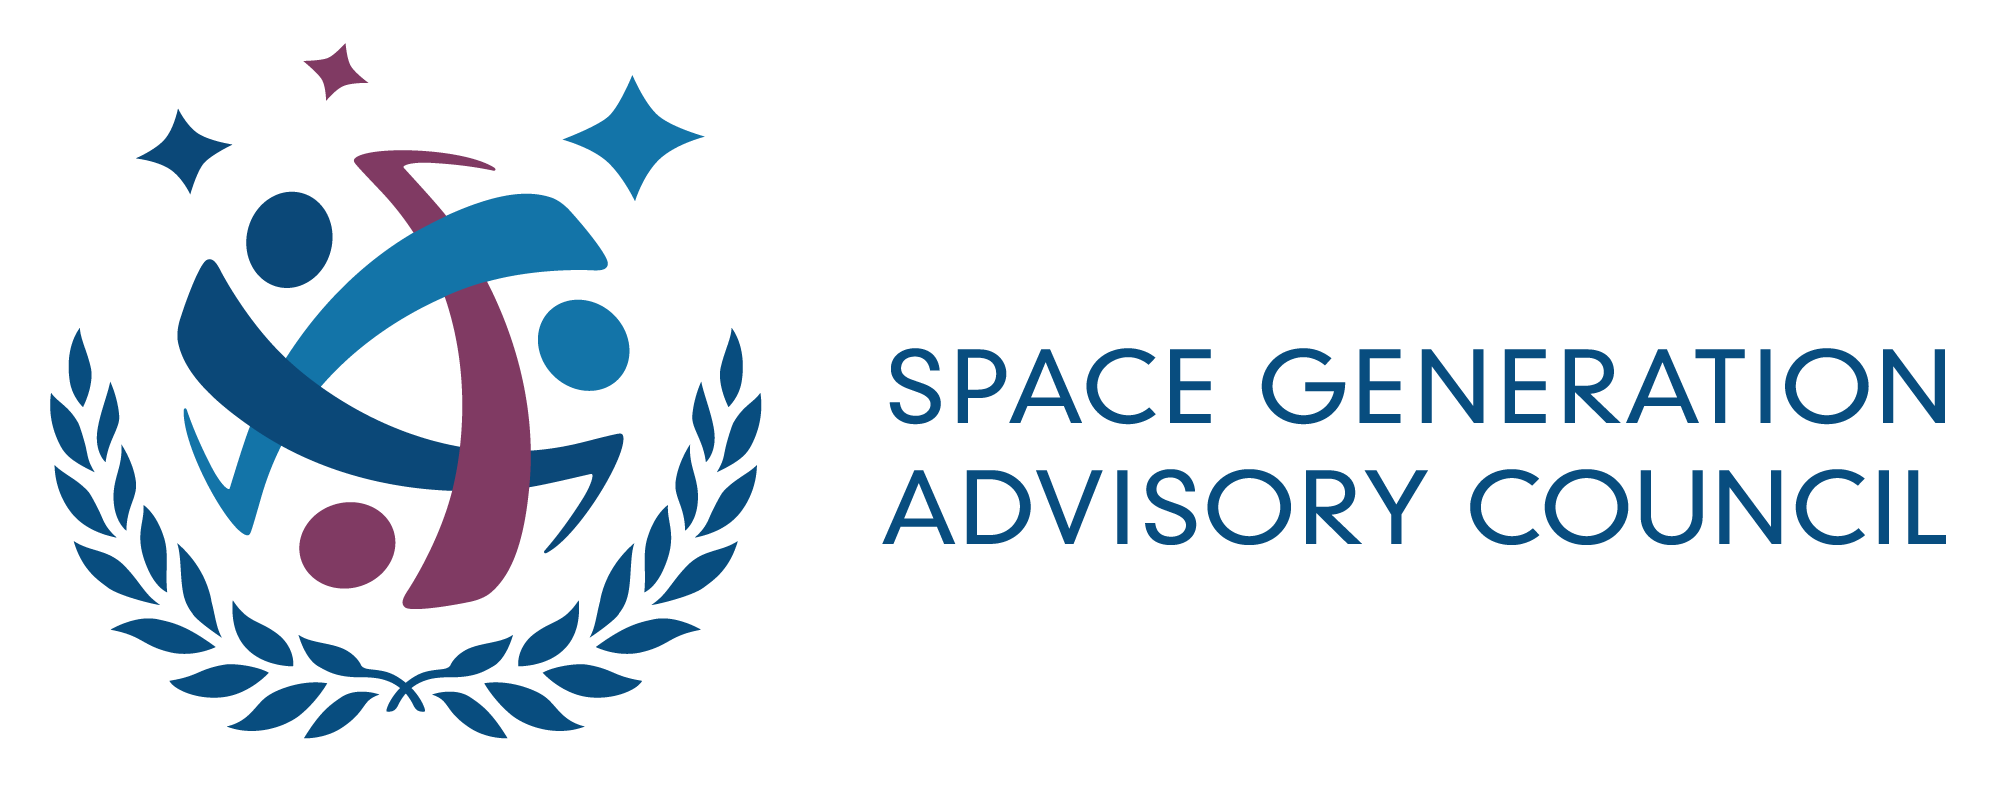 Space Generation Advisory Council (SGAC) logo